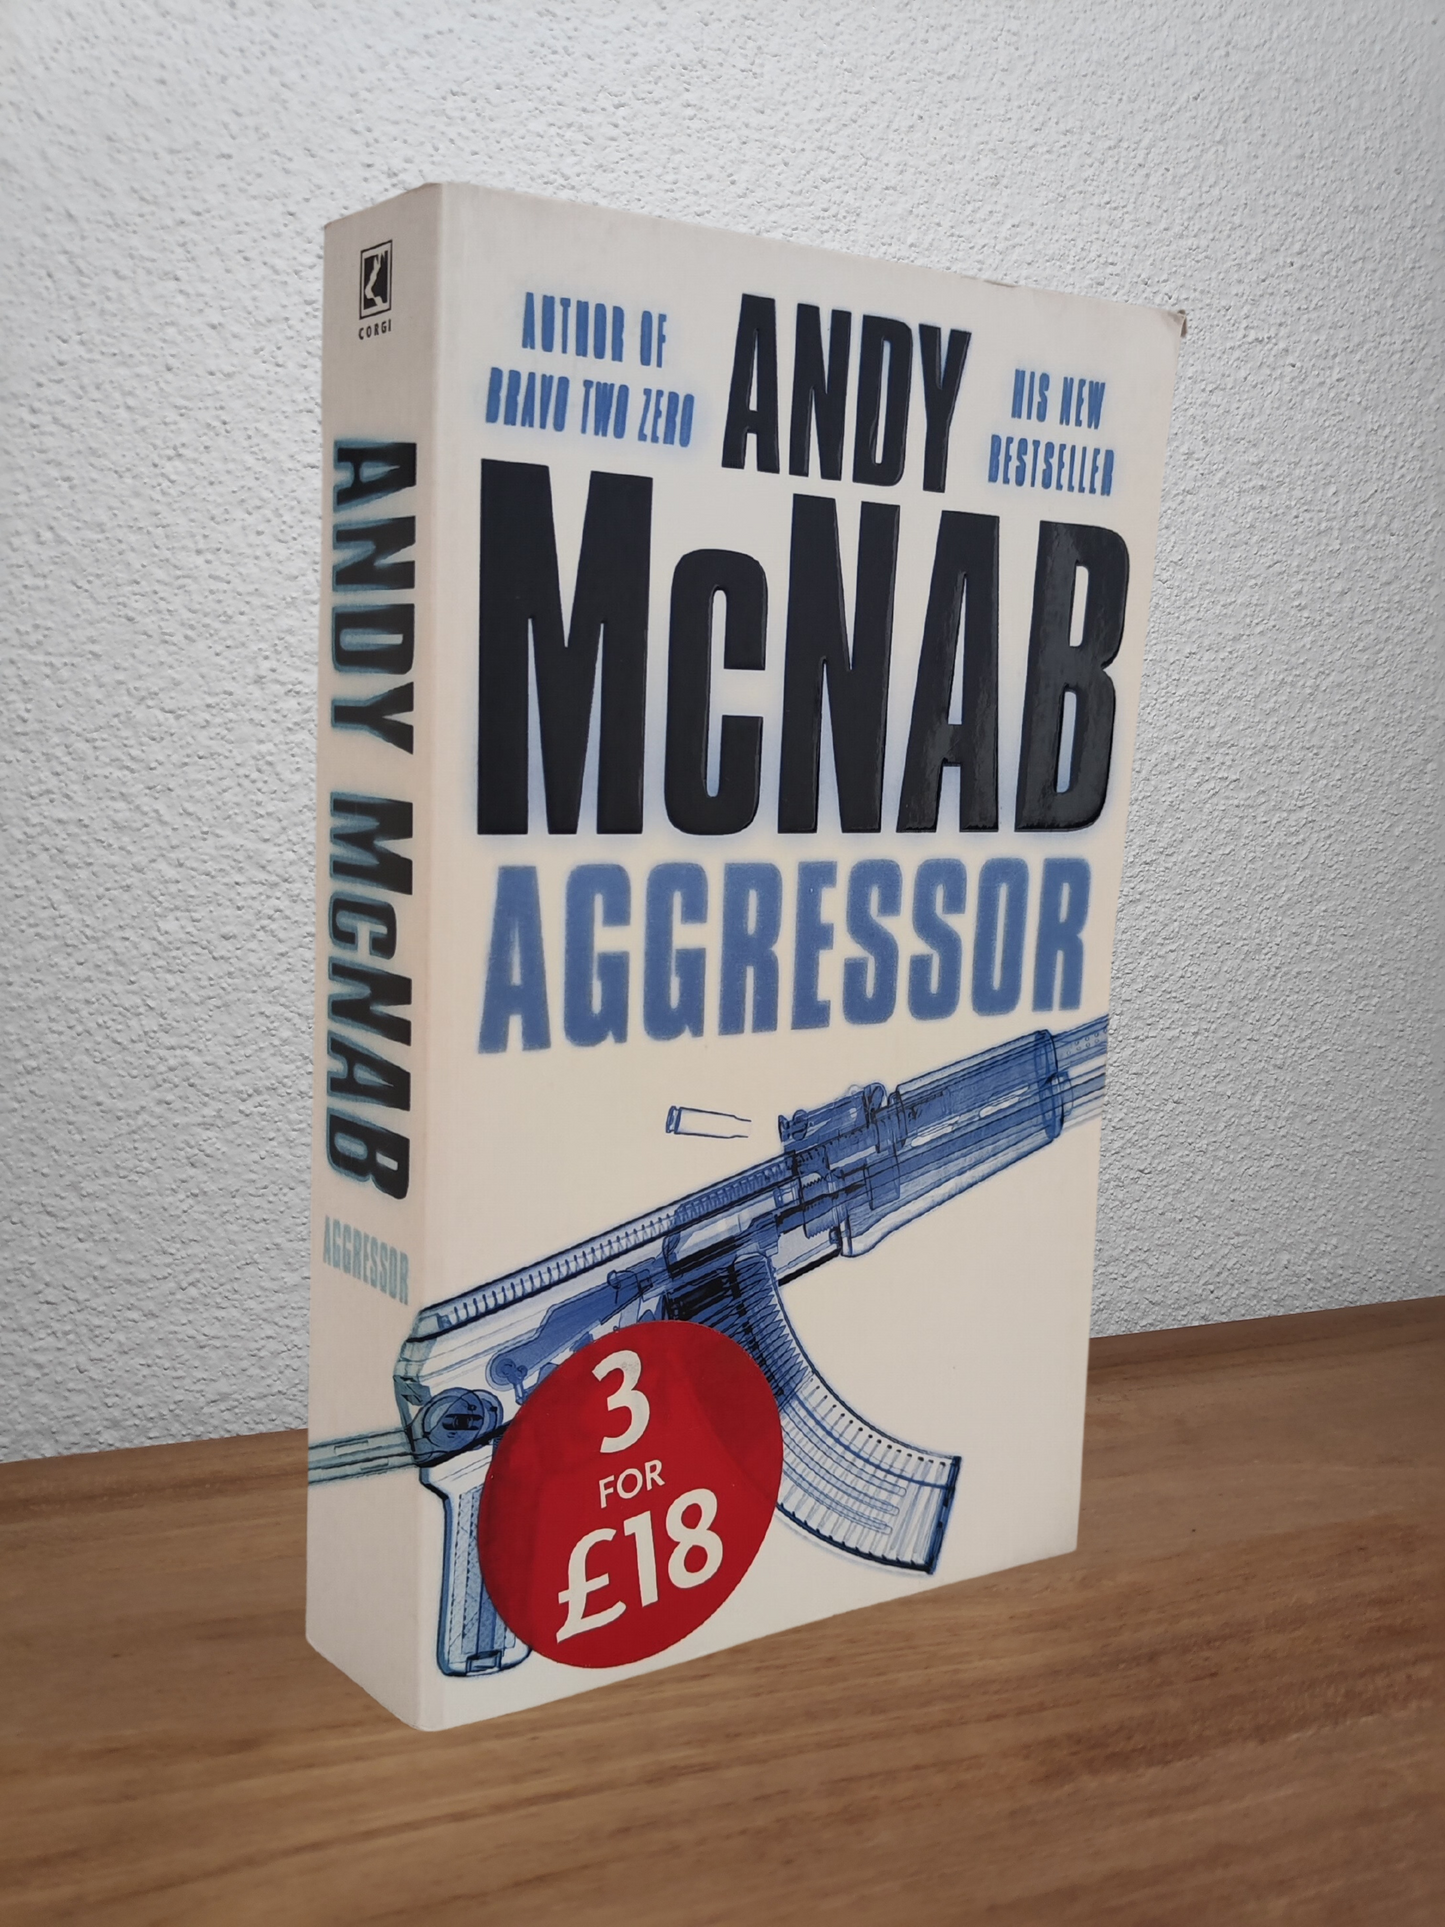 Andy McNab - Aggressor (Nick Stone #8)